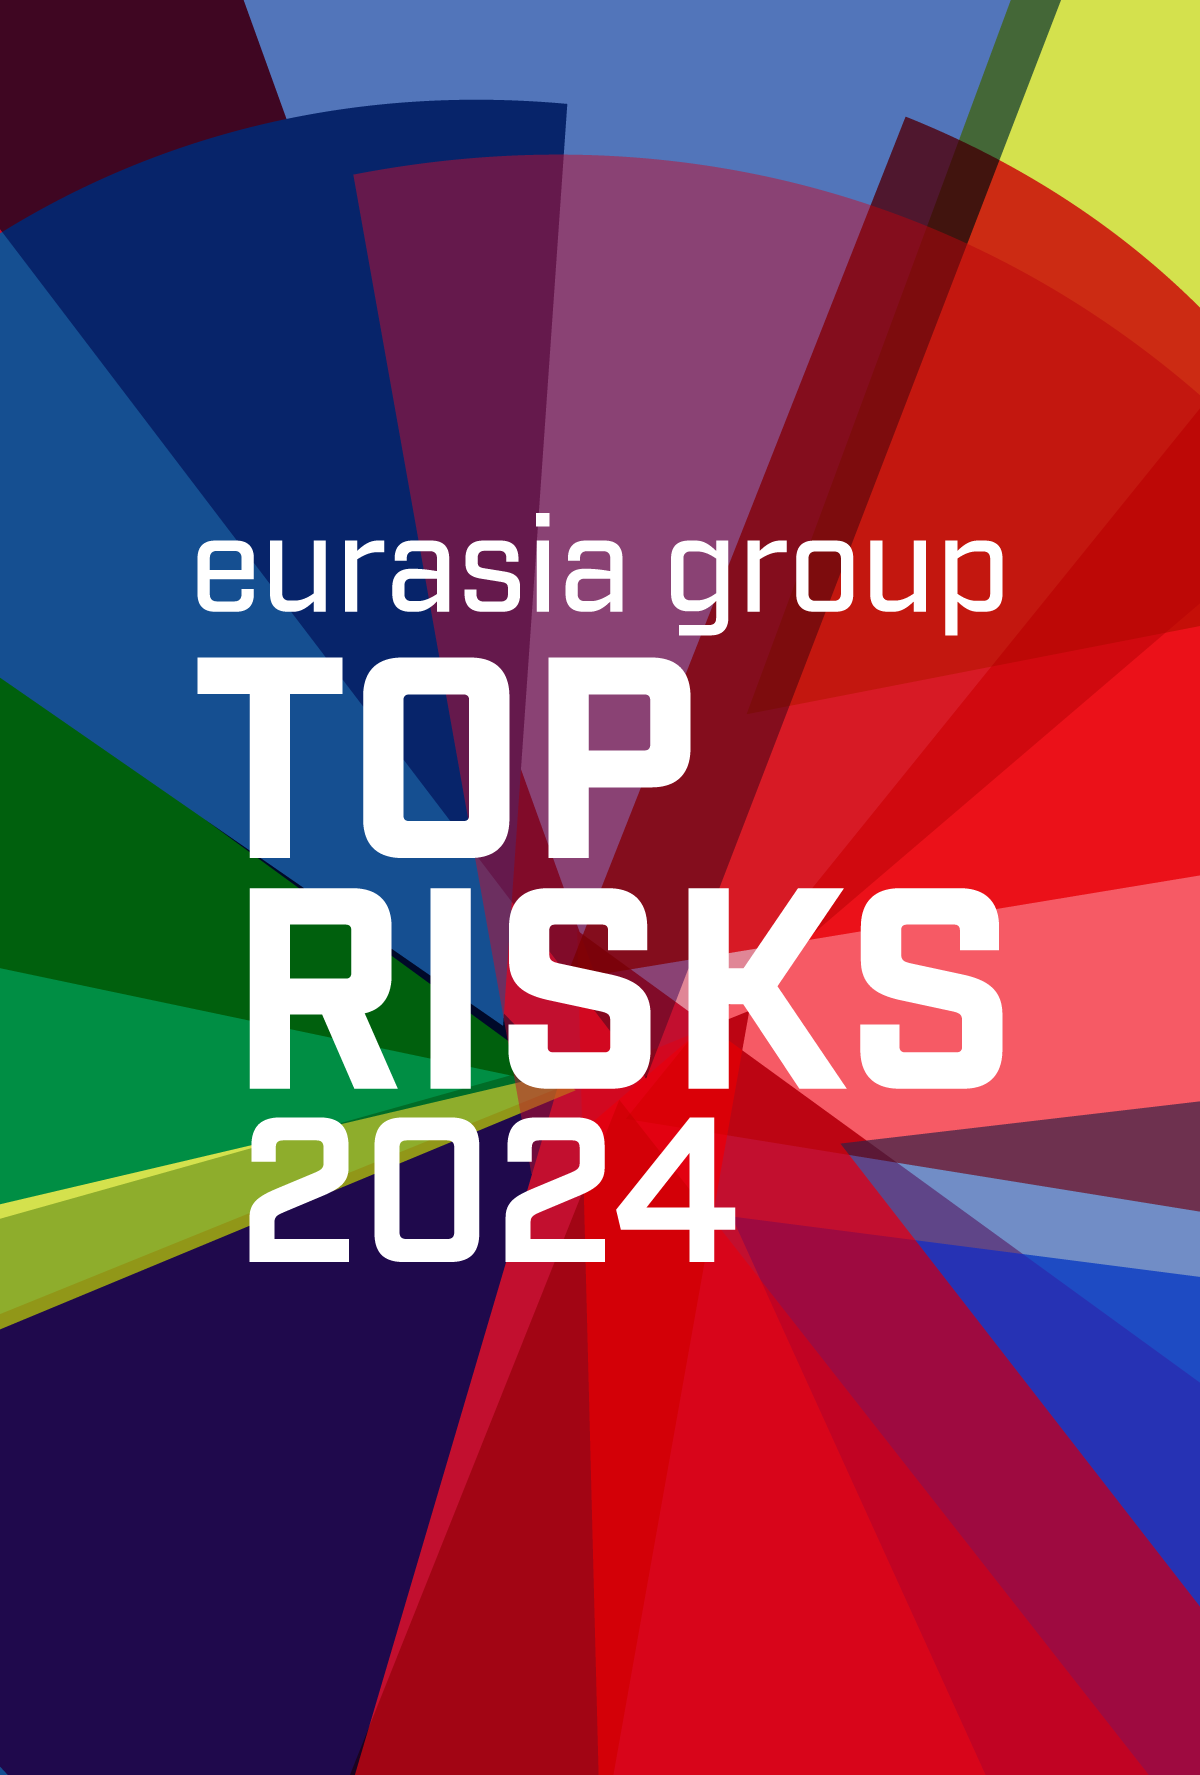 Top Risks Eurasia Group